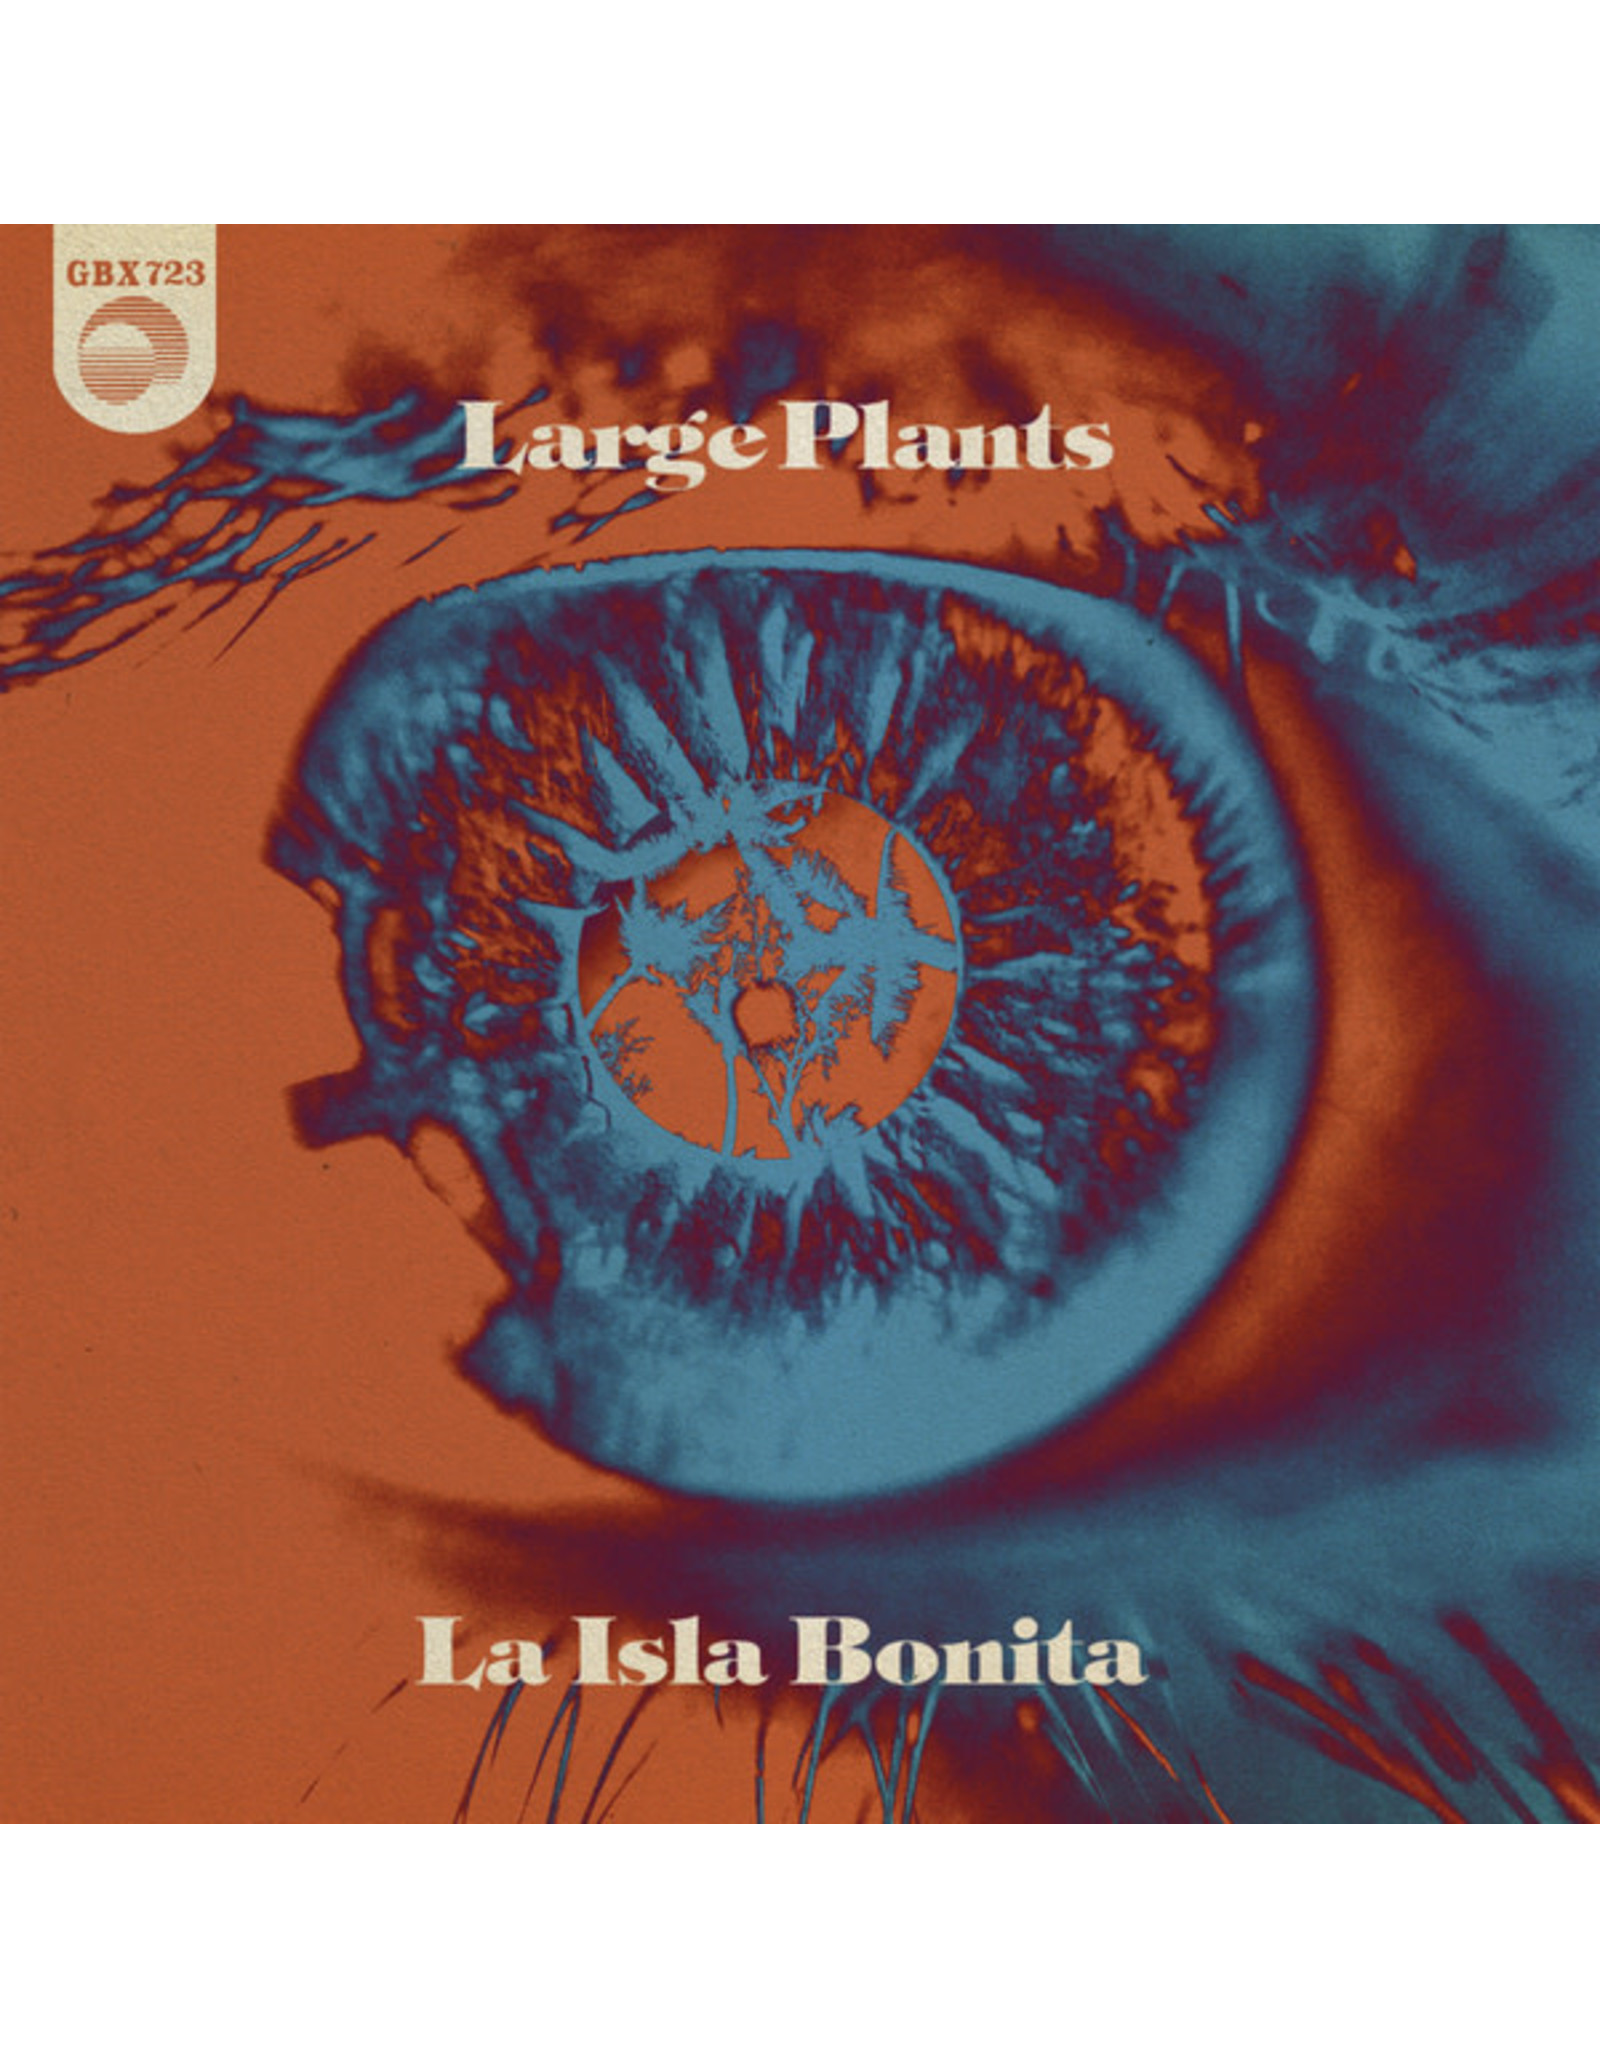 Ghost Box Large Plants: La Isla Bonita 7"